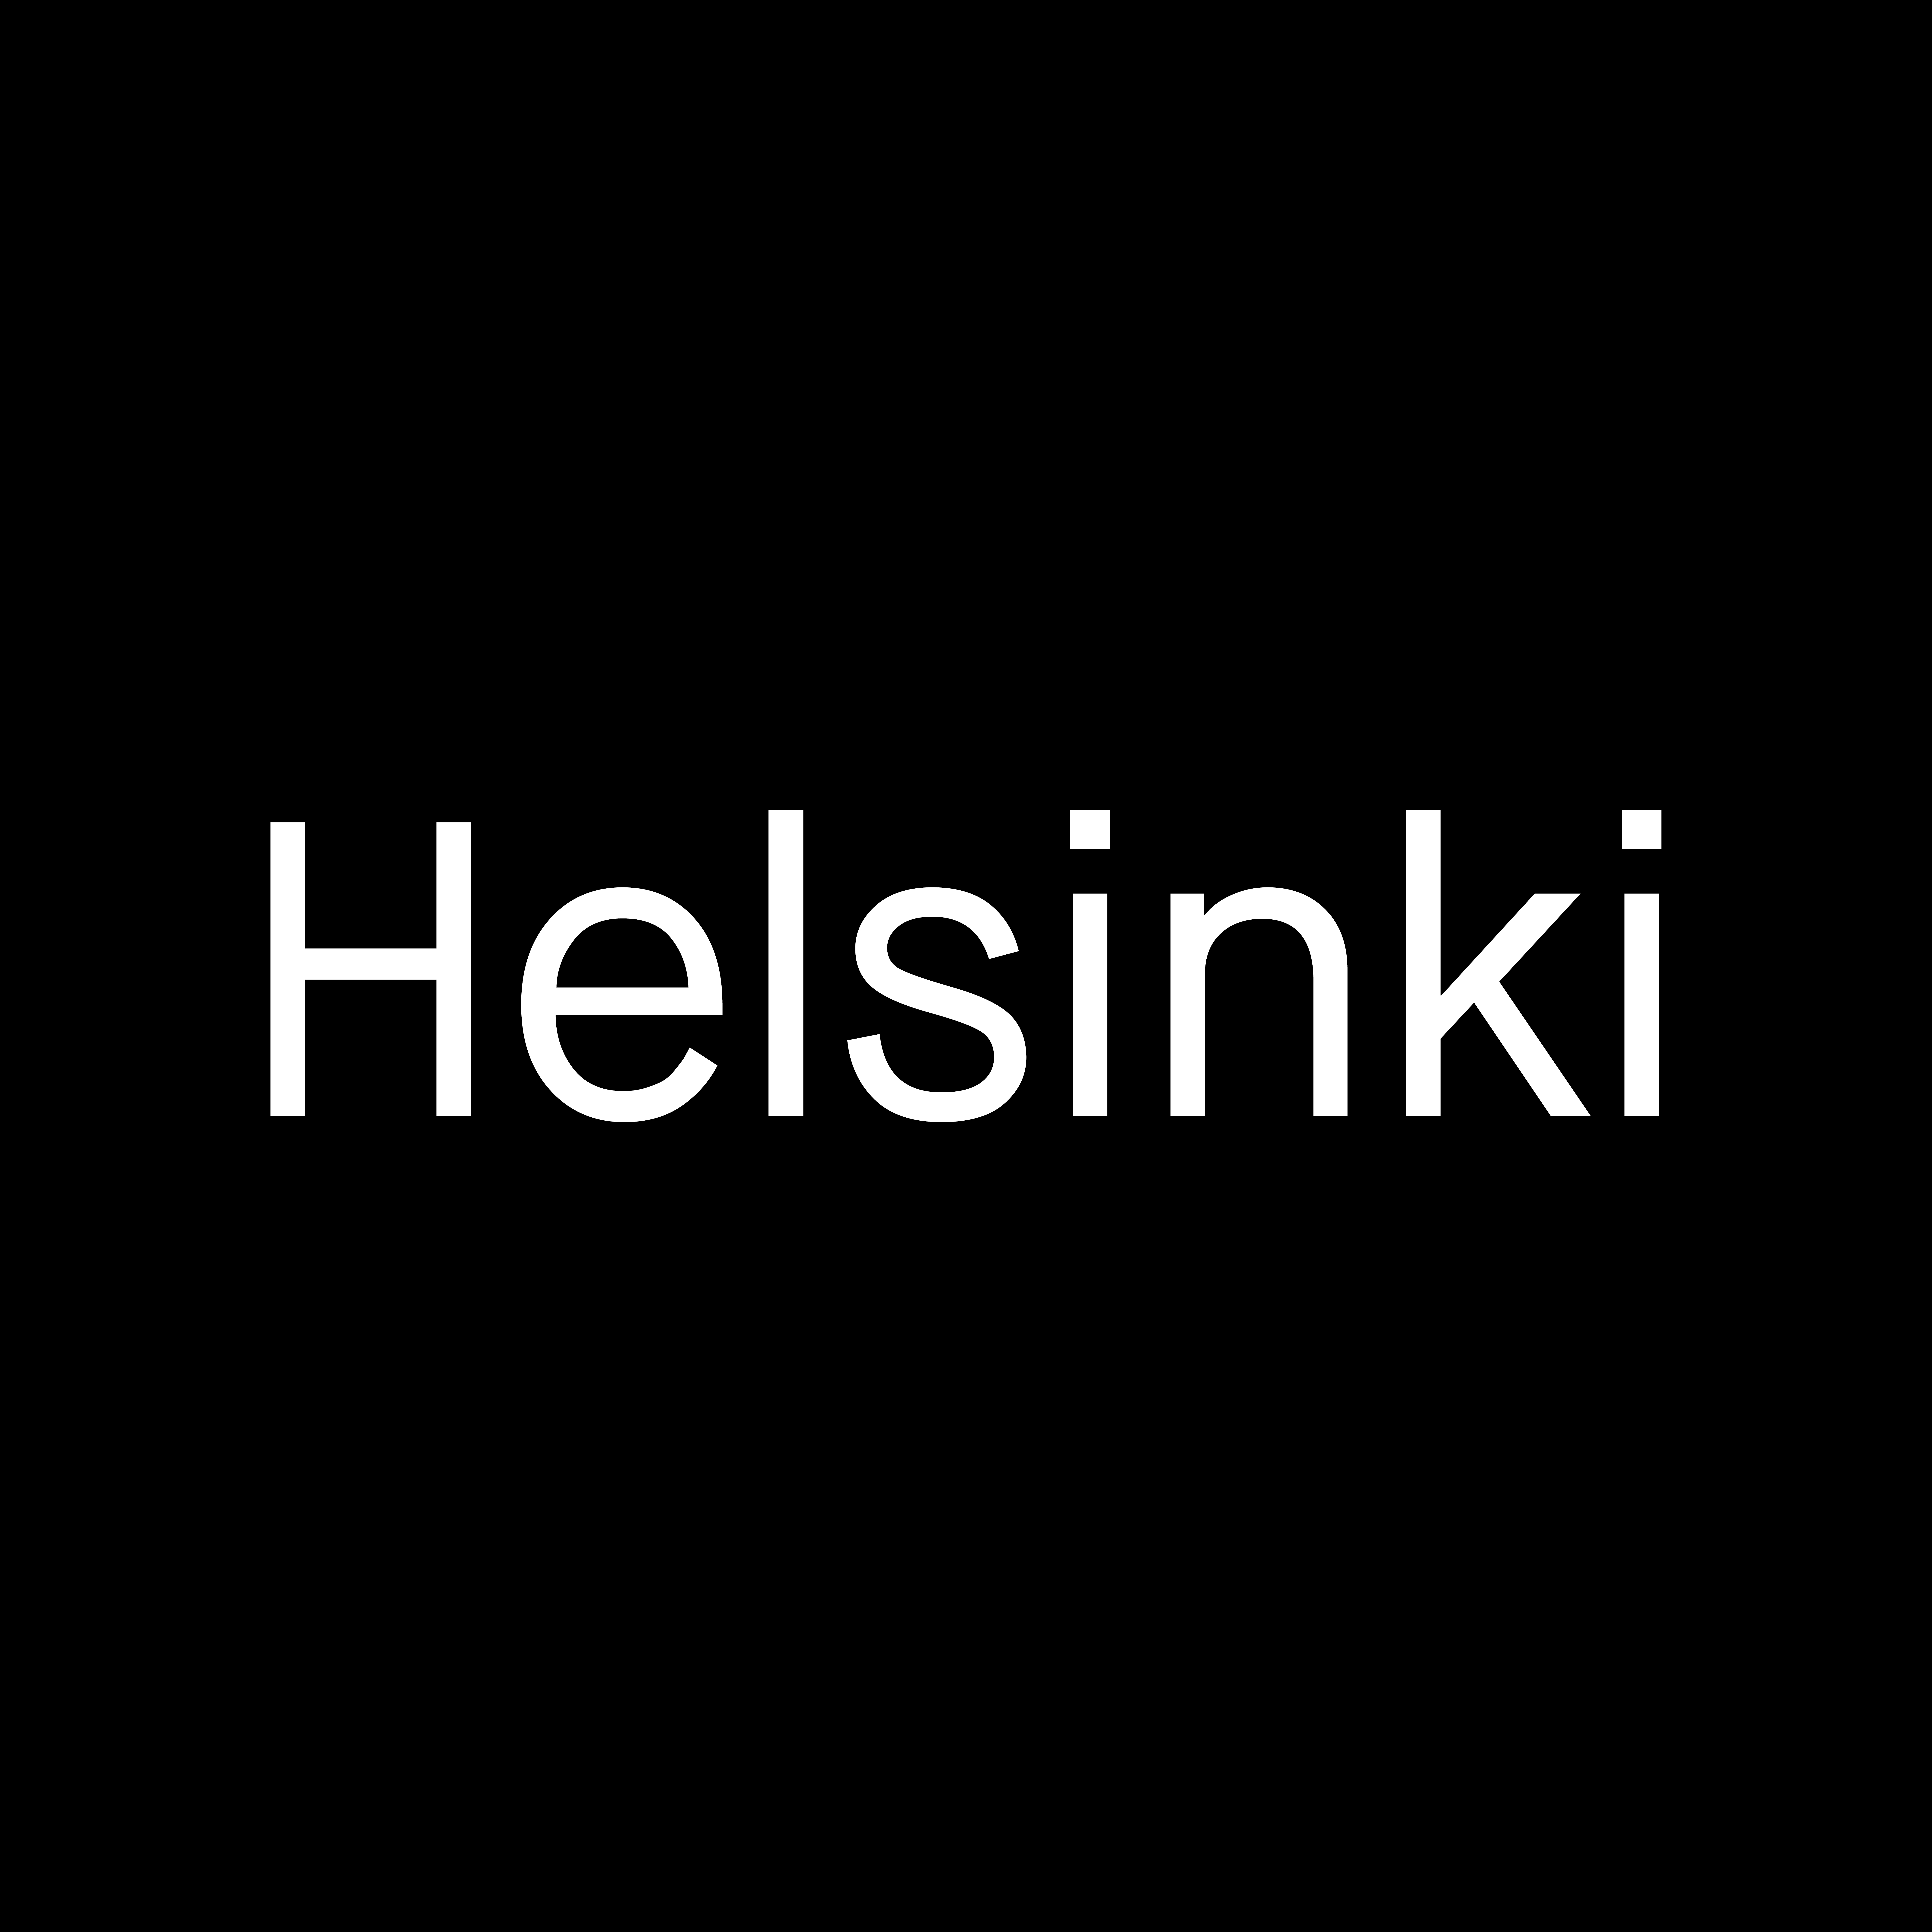 HELSINKI logo